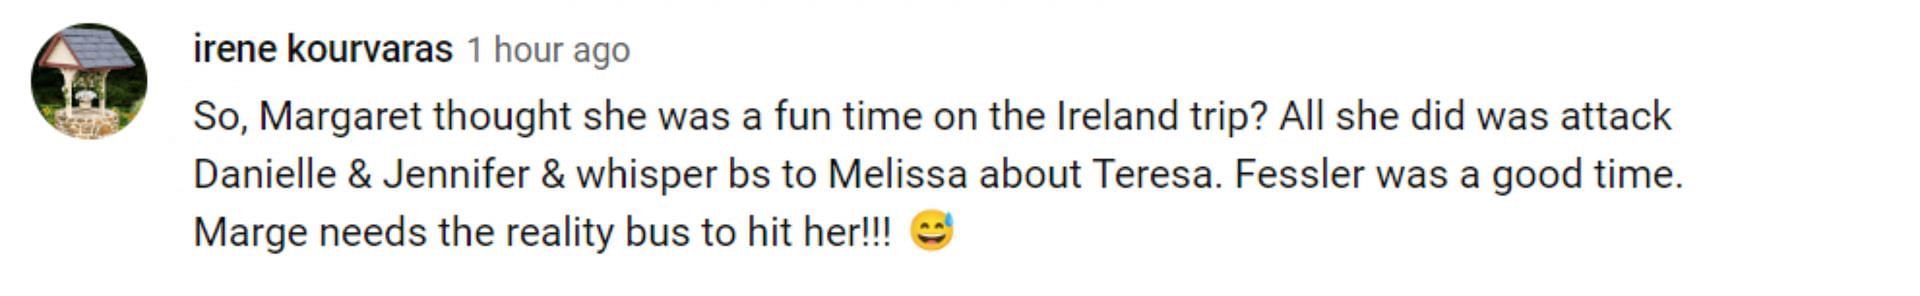 Fans slam Margaret for her comments about Danielle on RHONJ (Image via YouTube)